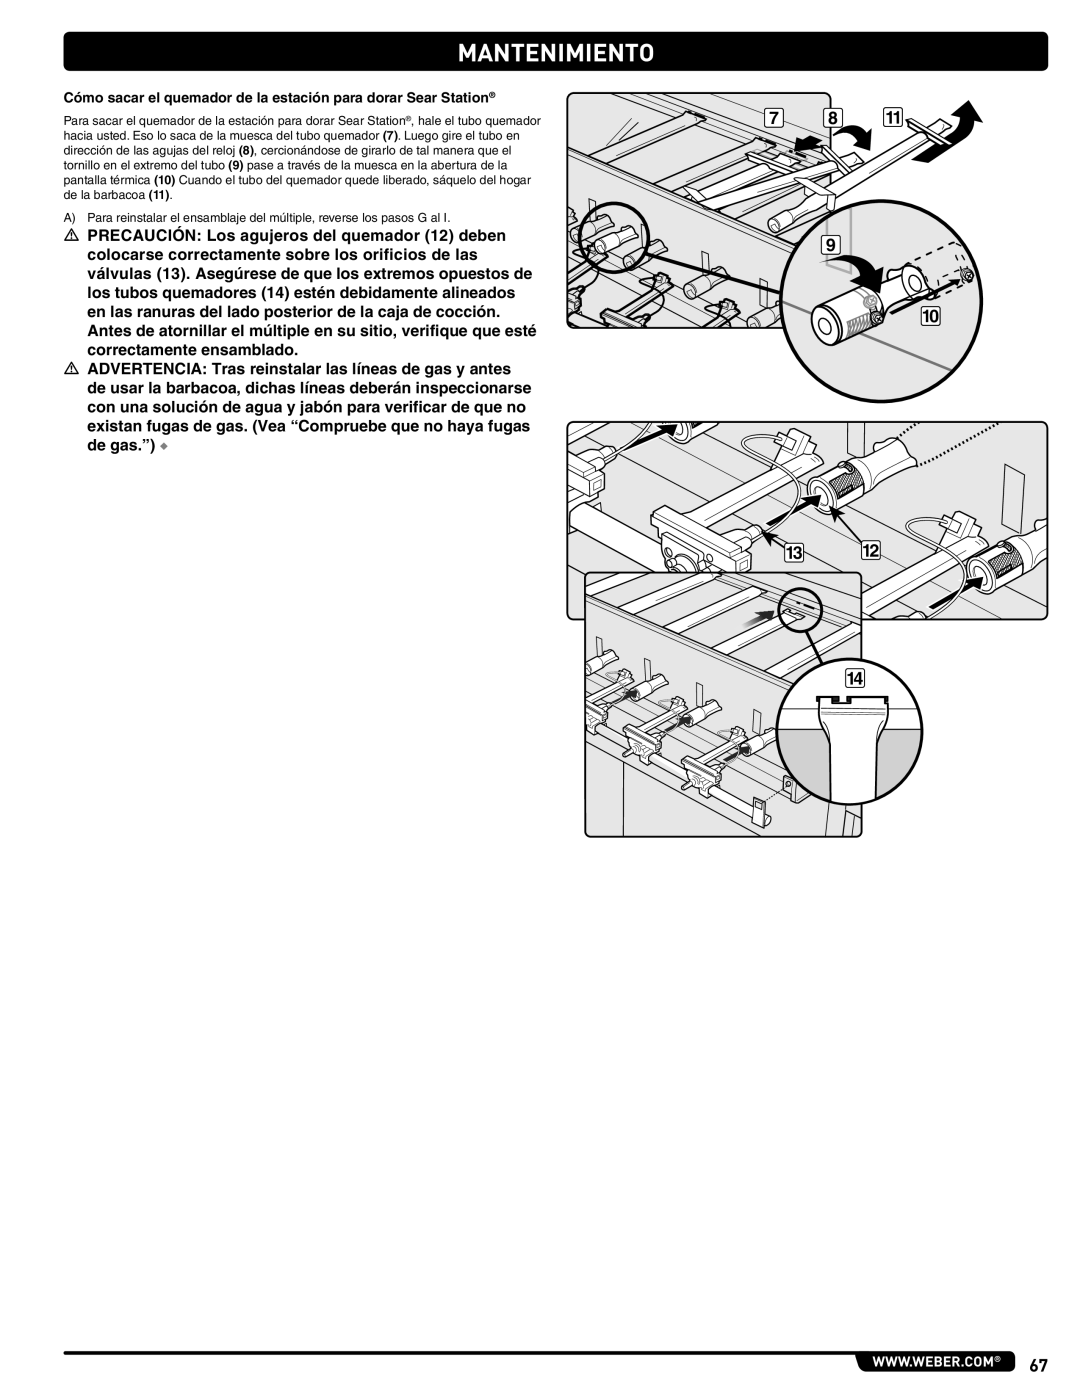 Weber 660- LP, Weber manual 115 